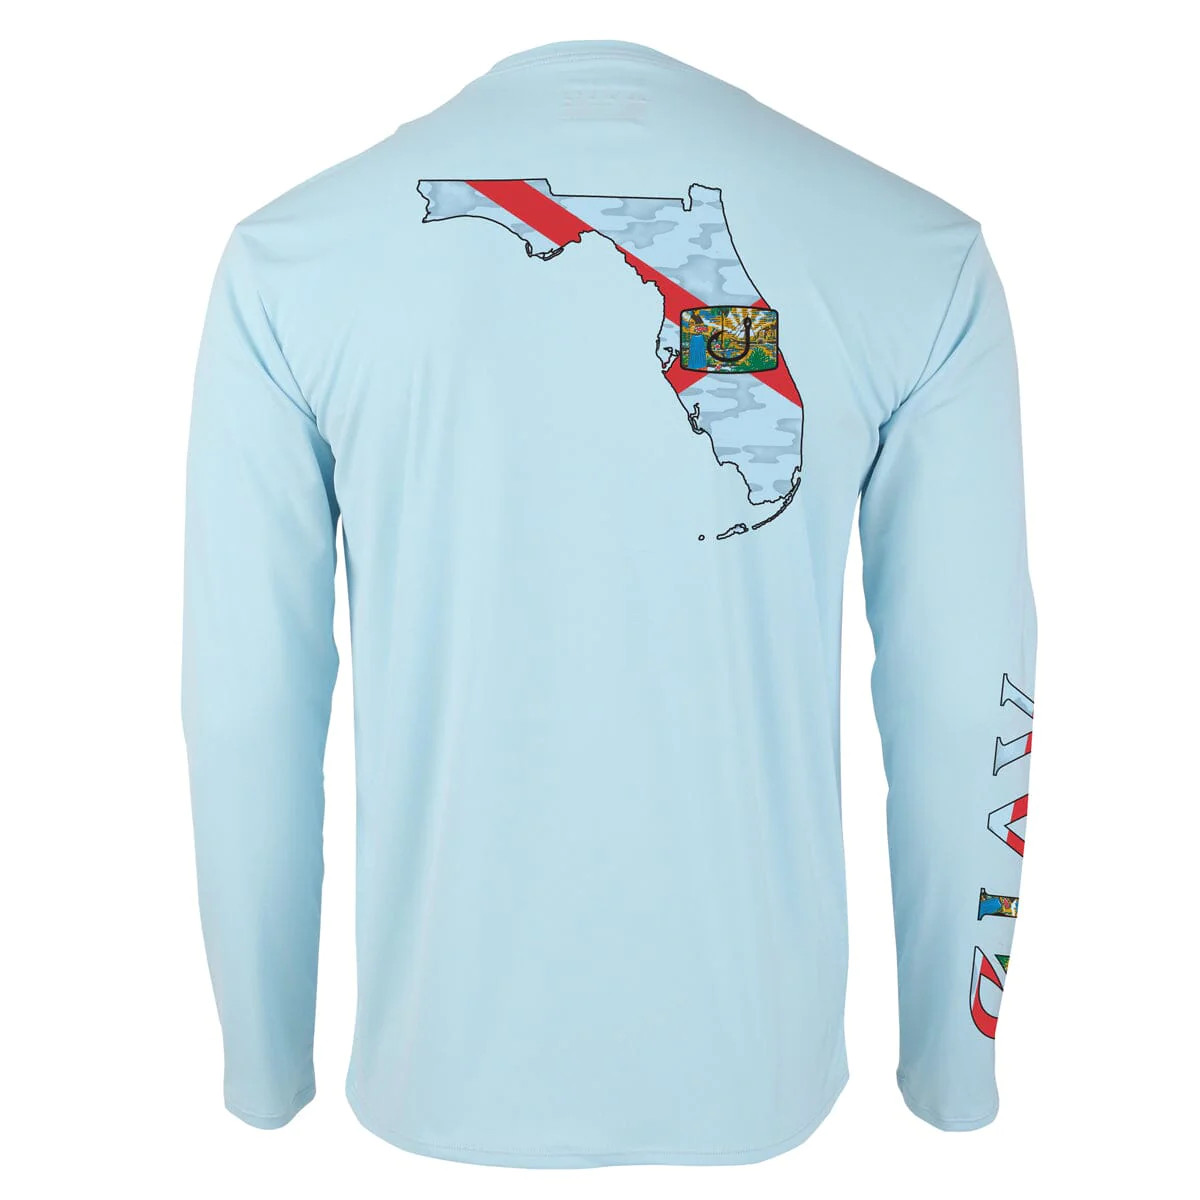 AVID Florida Native AVIDry Long Sleeve Performance Shirt (Men's) - Ice Blue Back